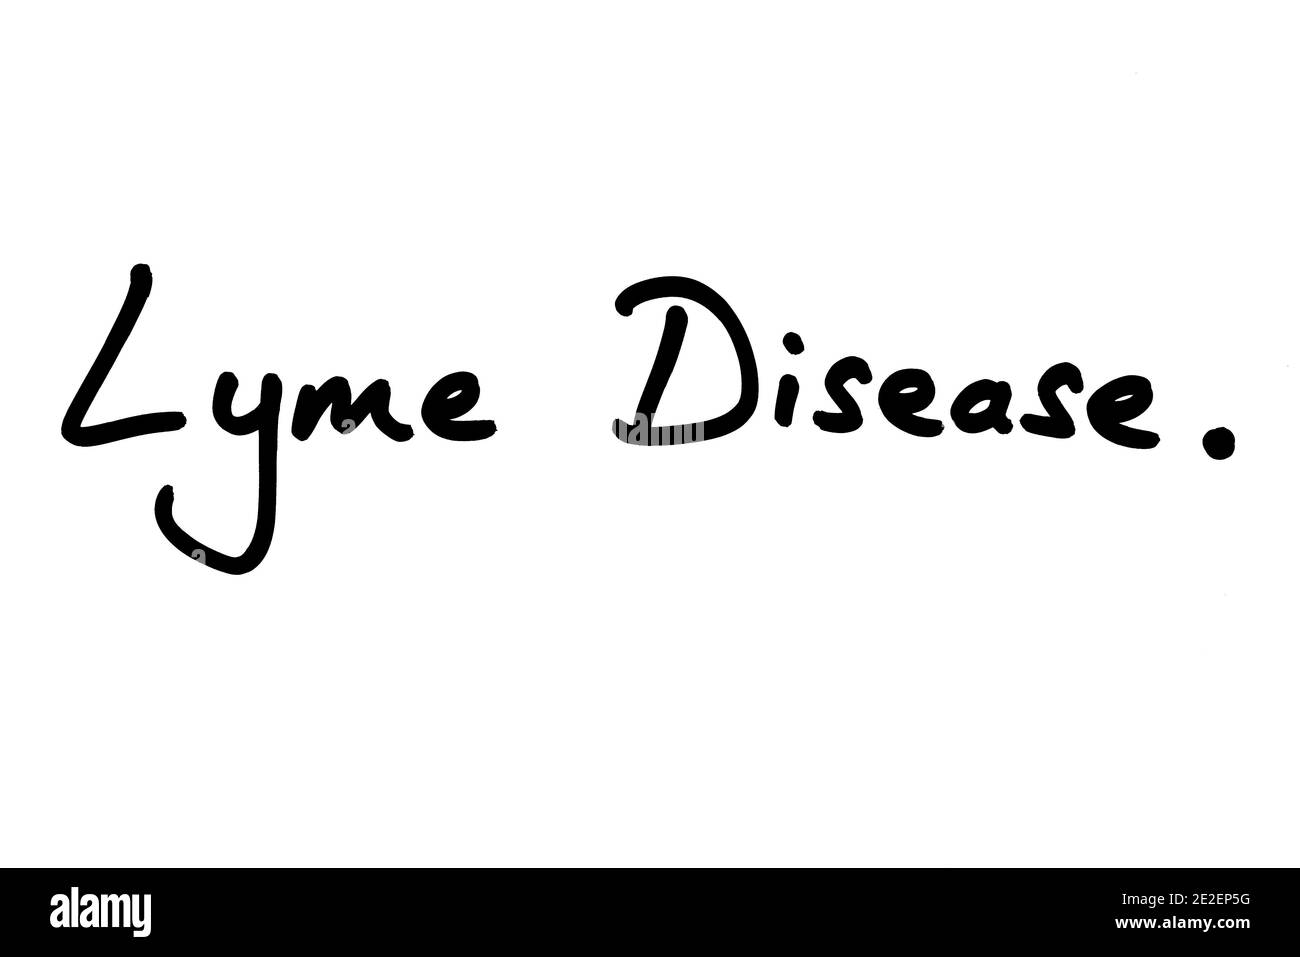 Lyme Disease, handwritten on a white background. Stock Photo